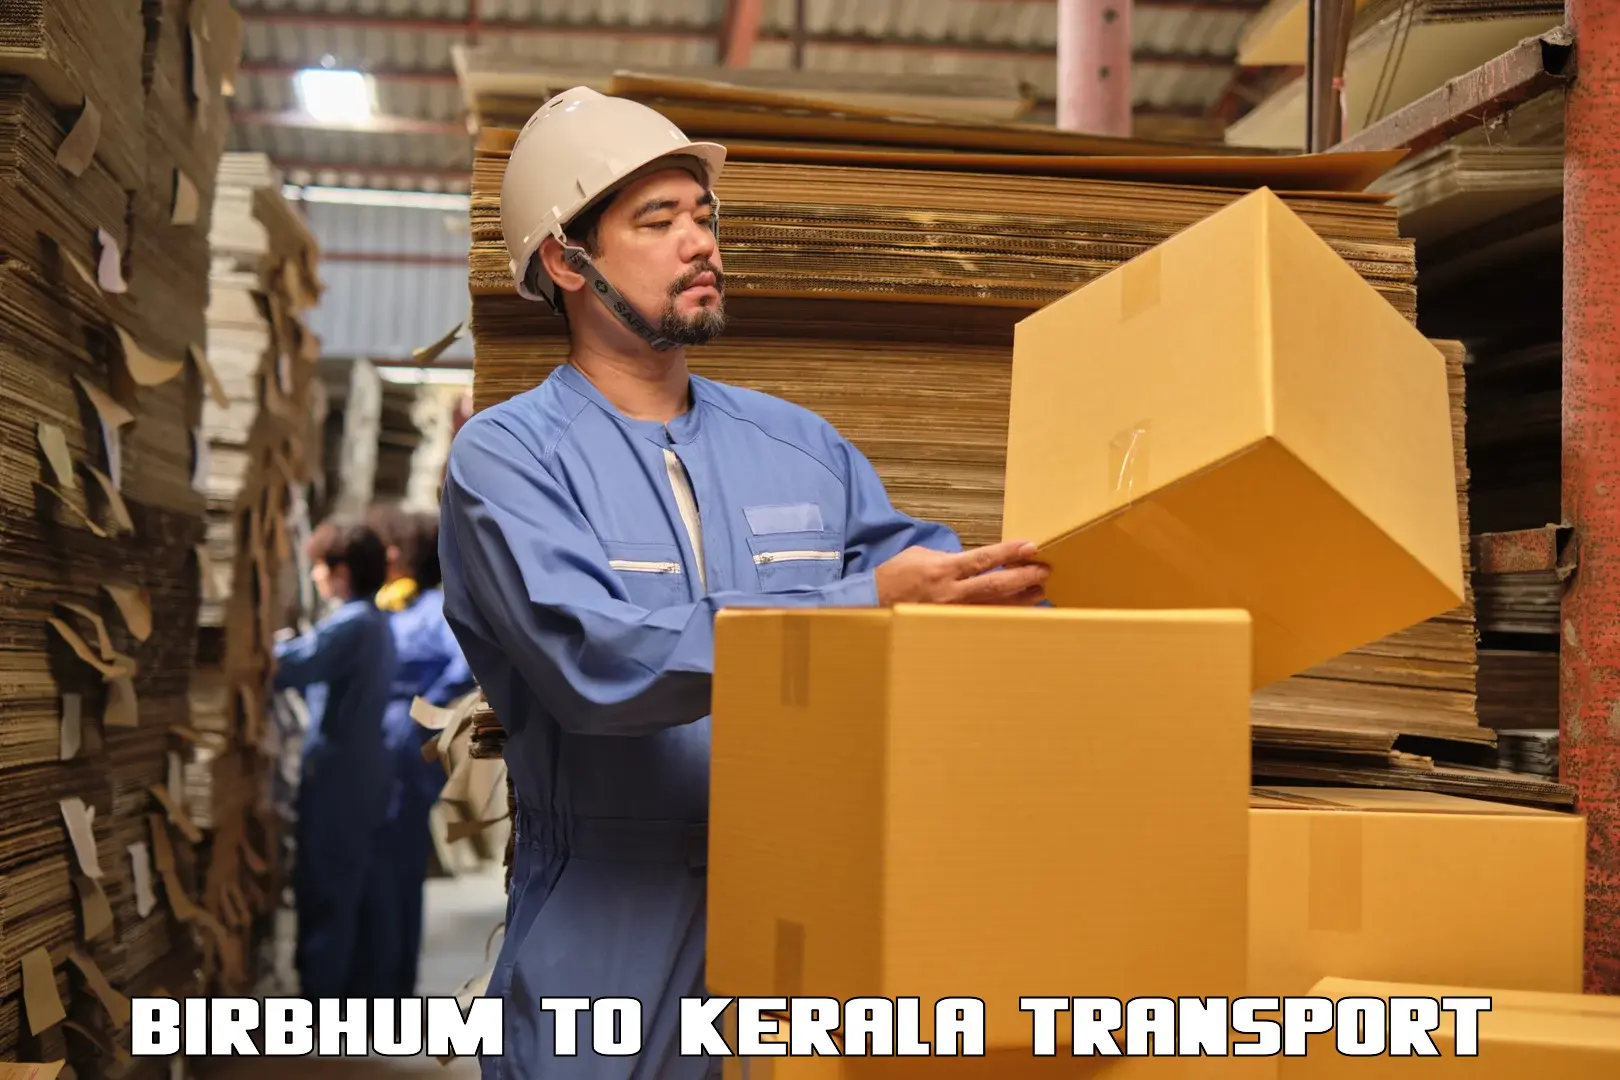 Delivery service Birbhum to Kollam